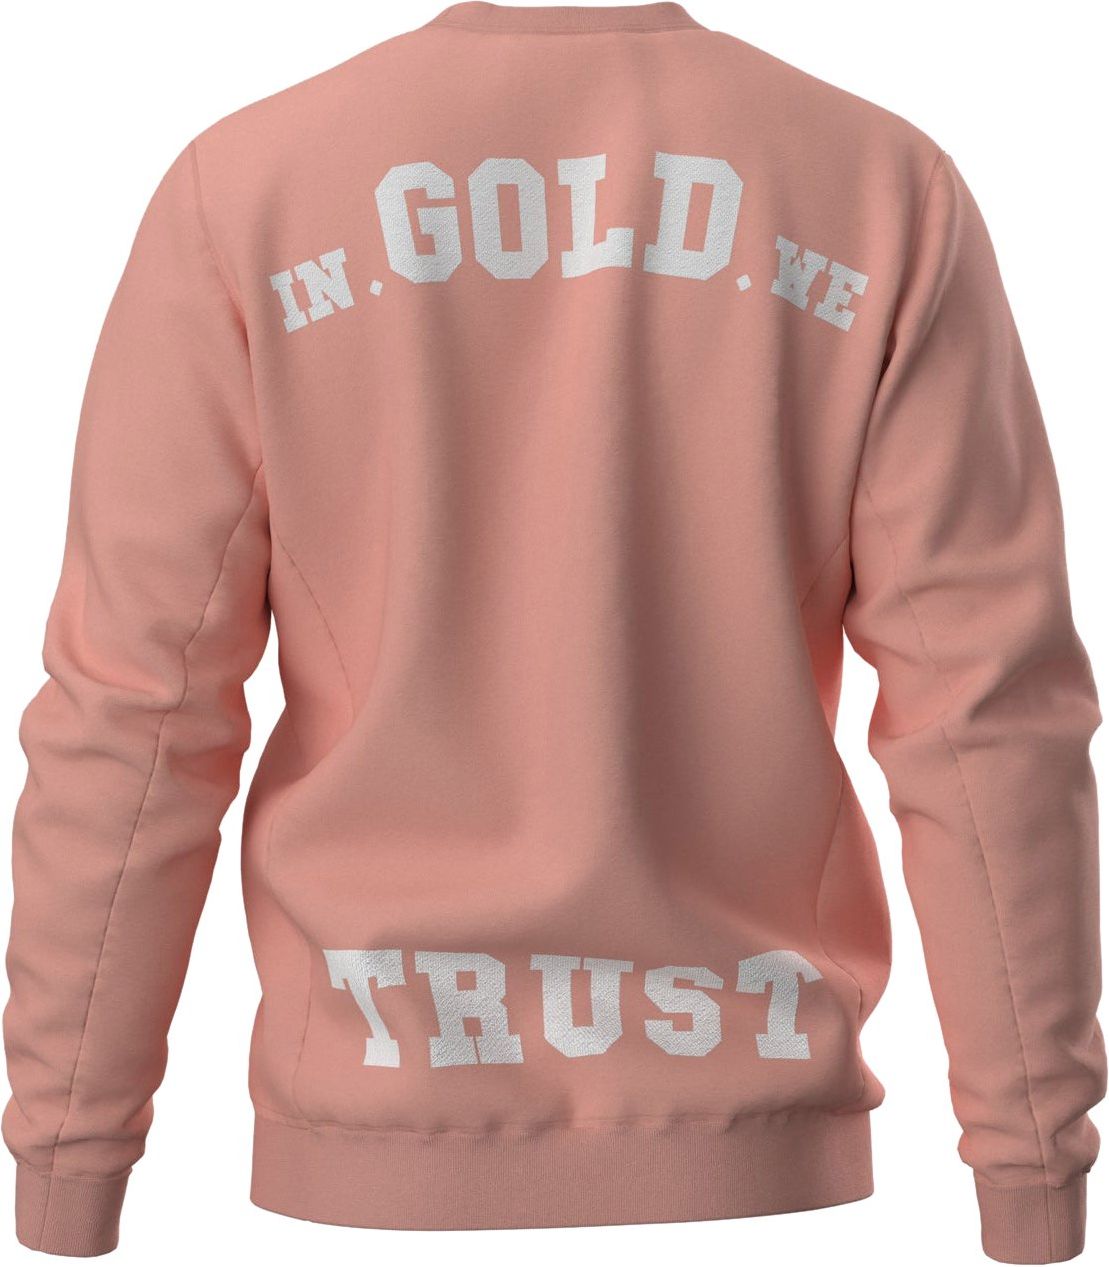 In Gold We Trust The Slim 2.0 Peach Pearl Roze